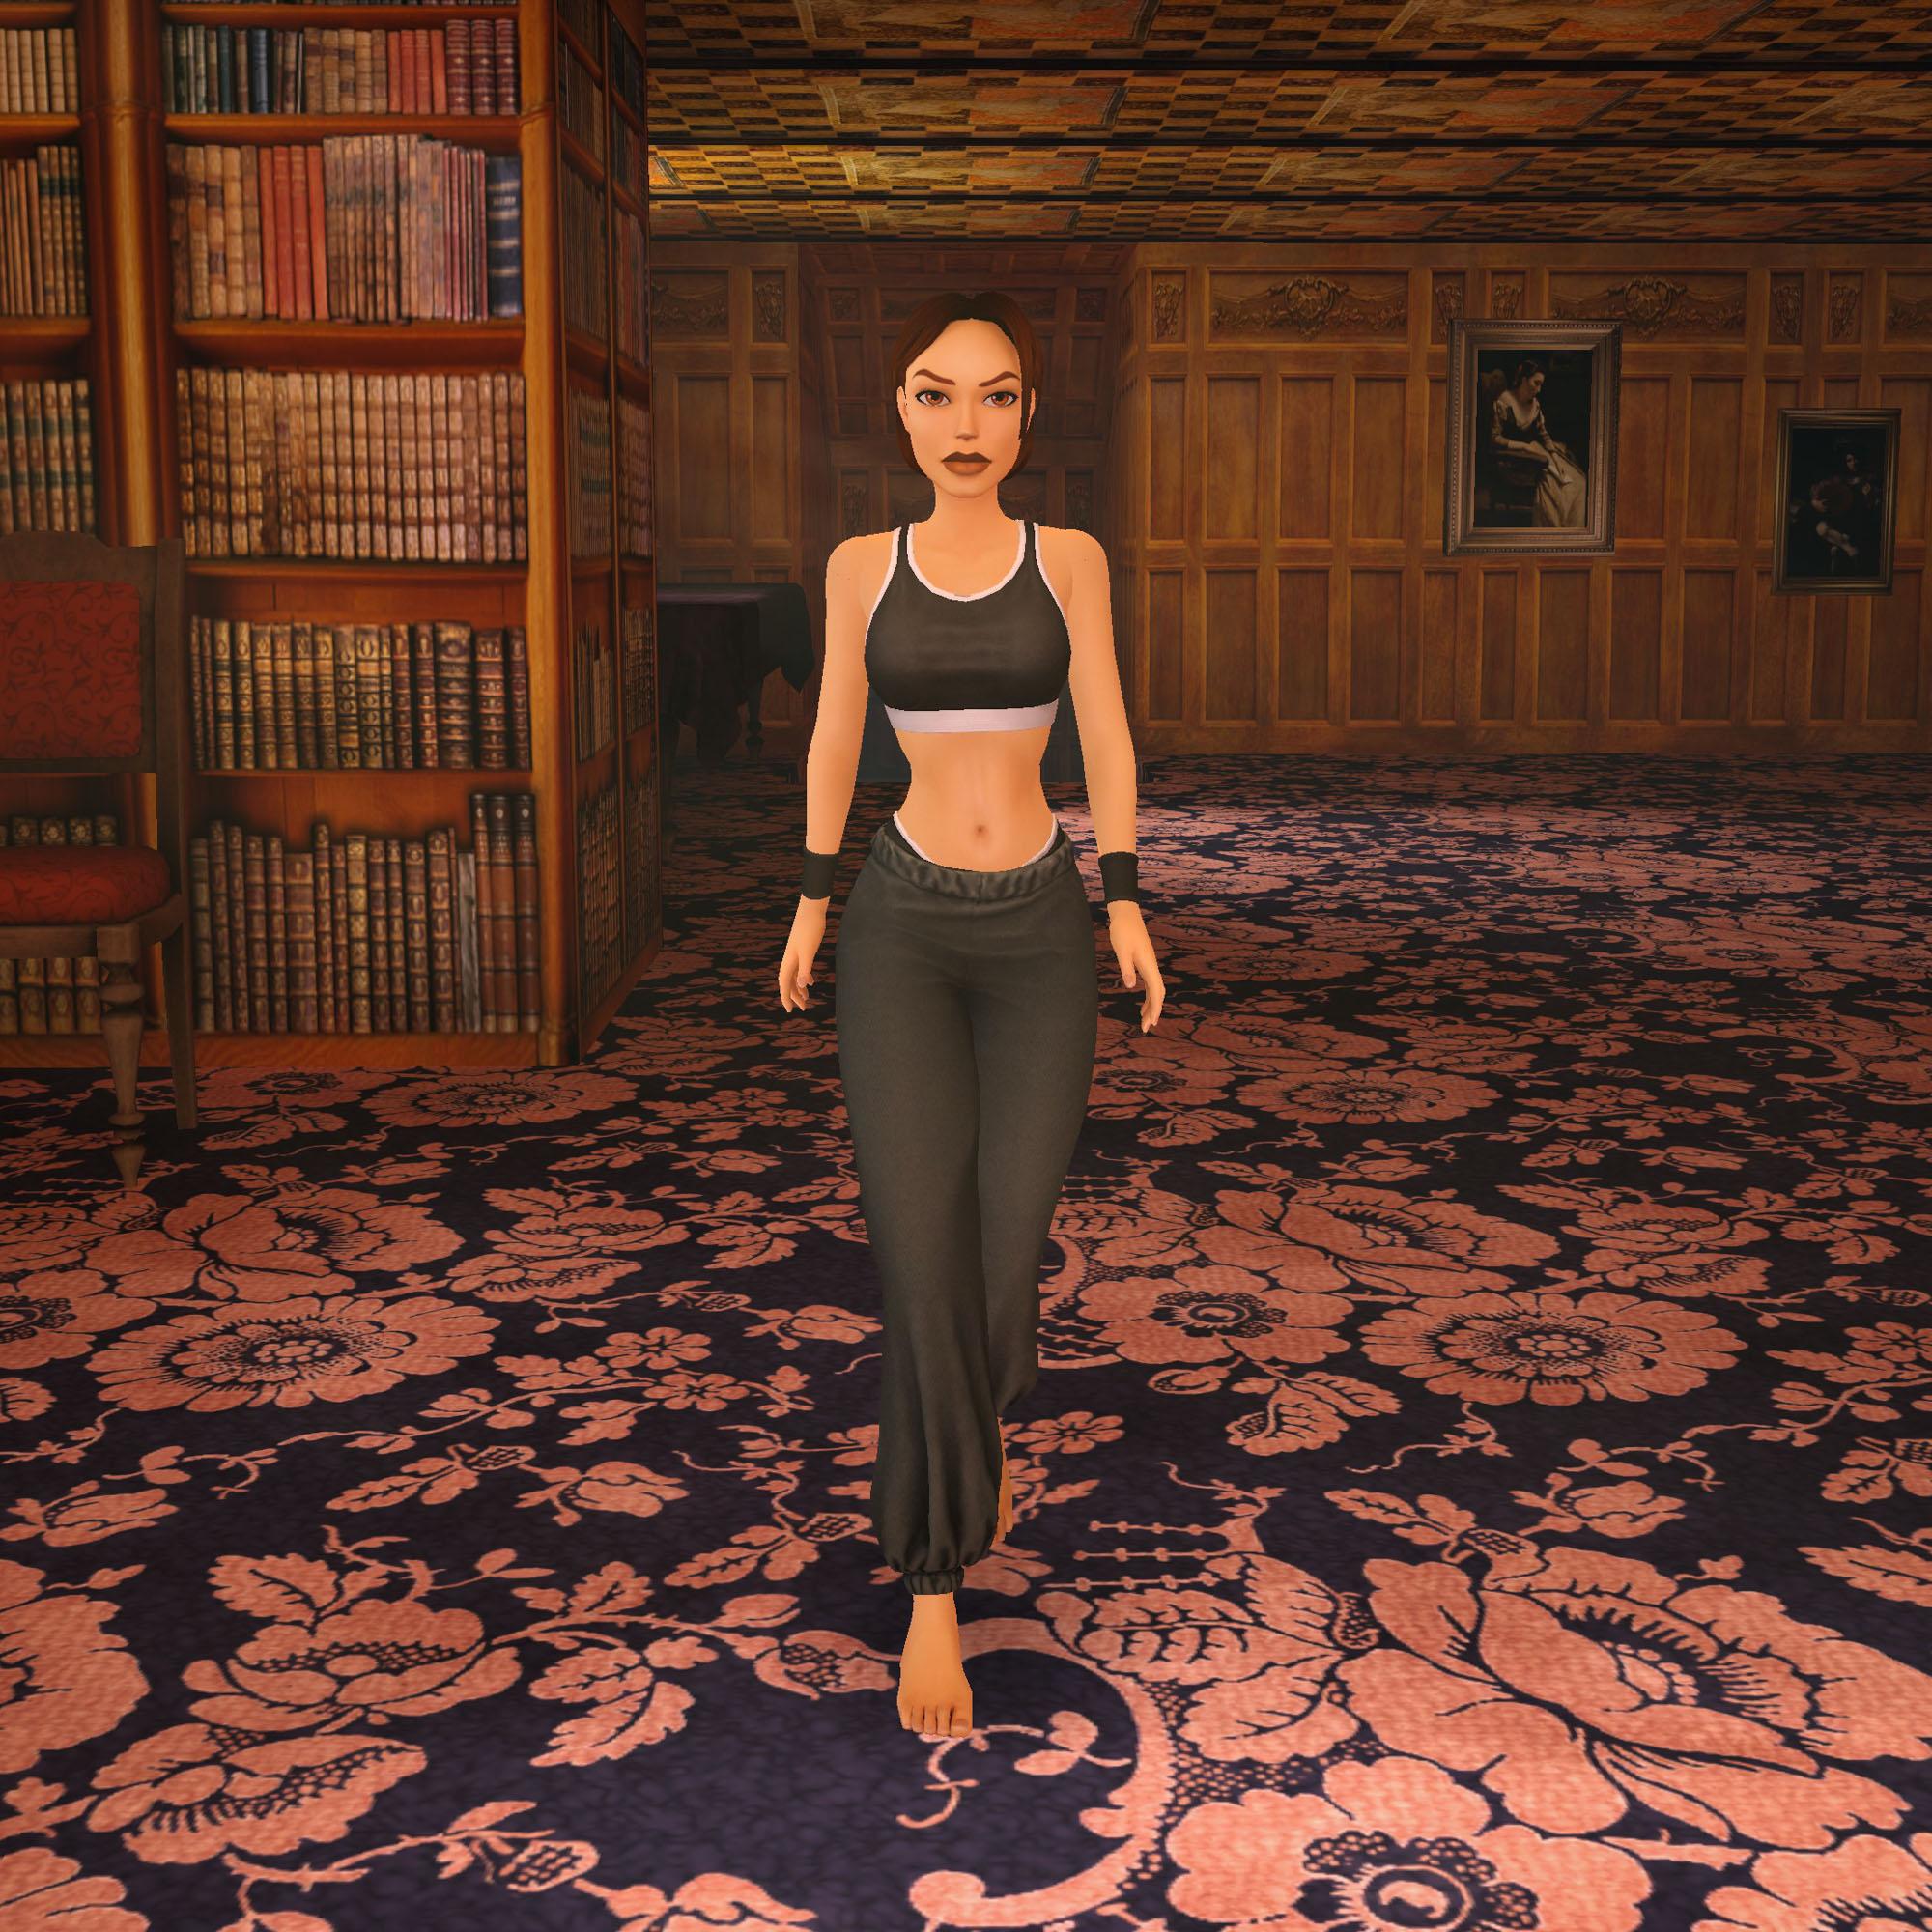 Lara Croft in the starting room of Croft Manor.